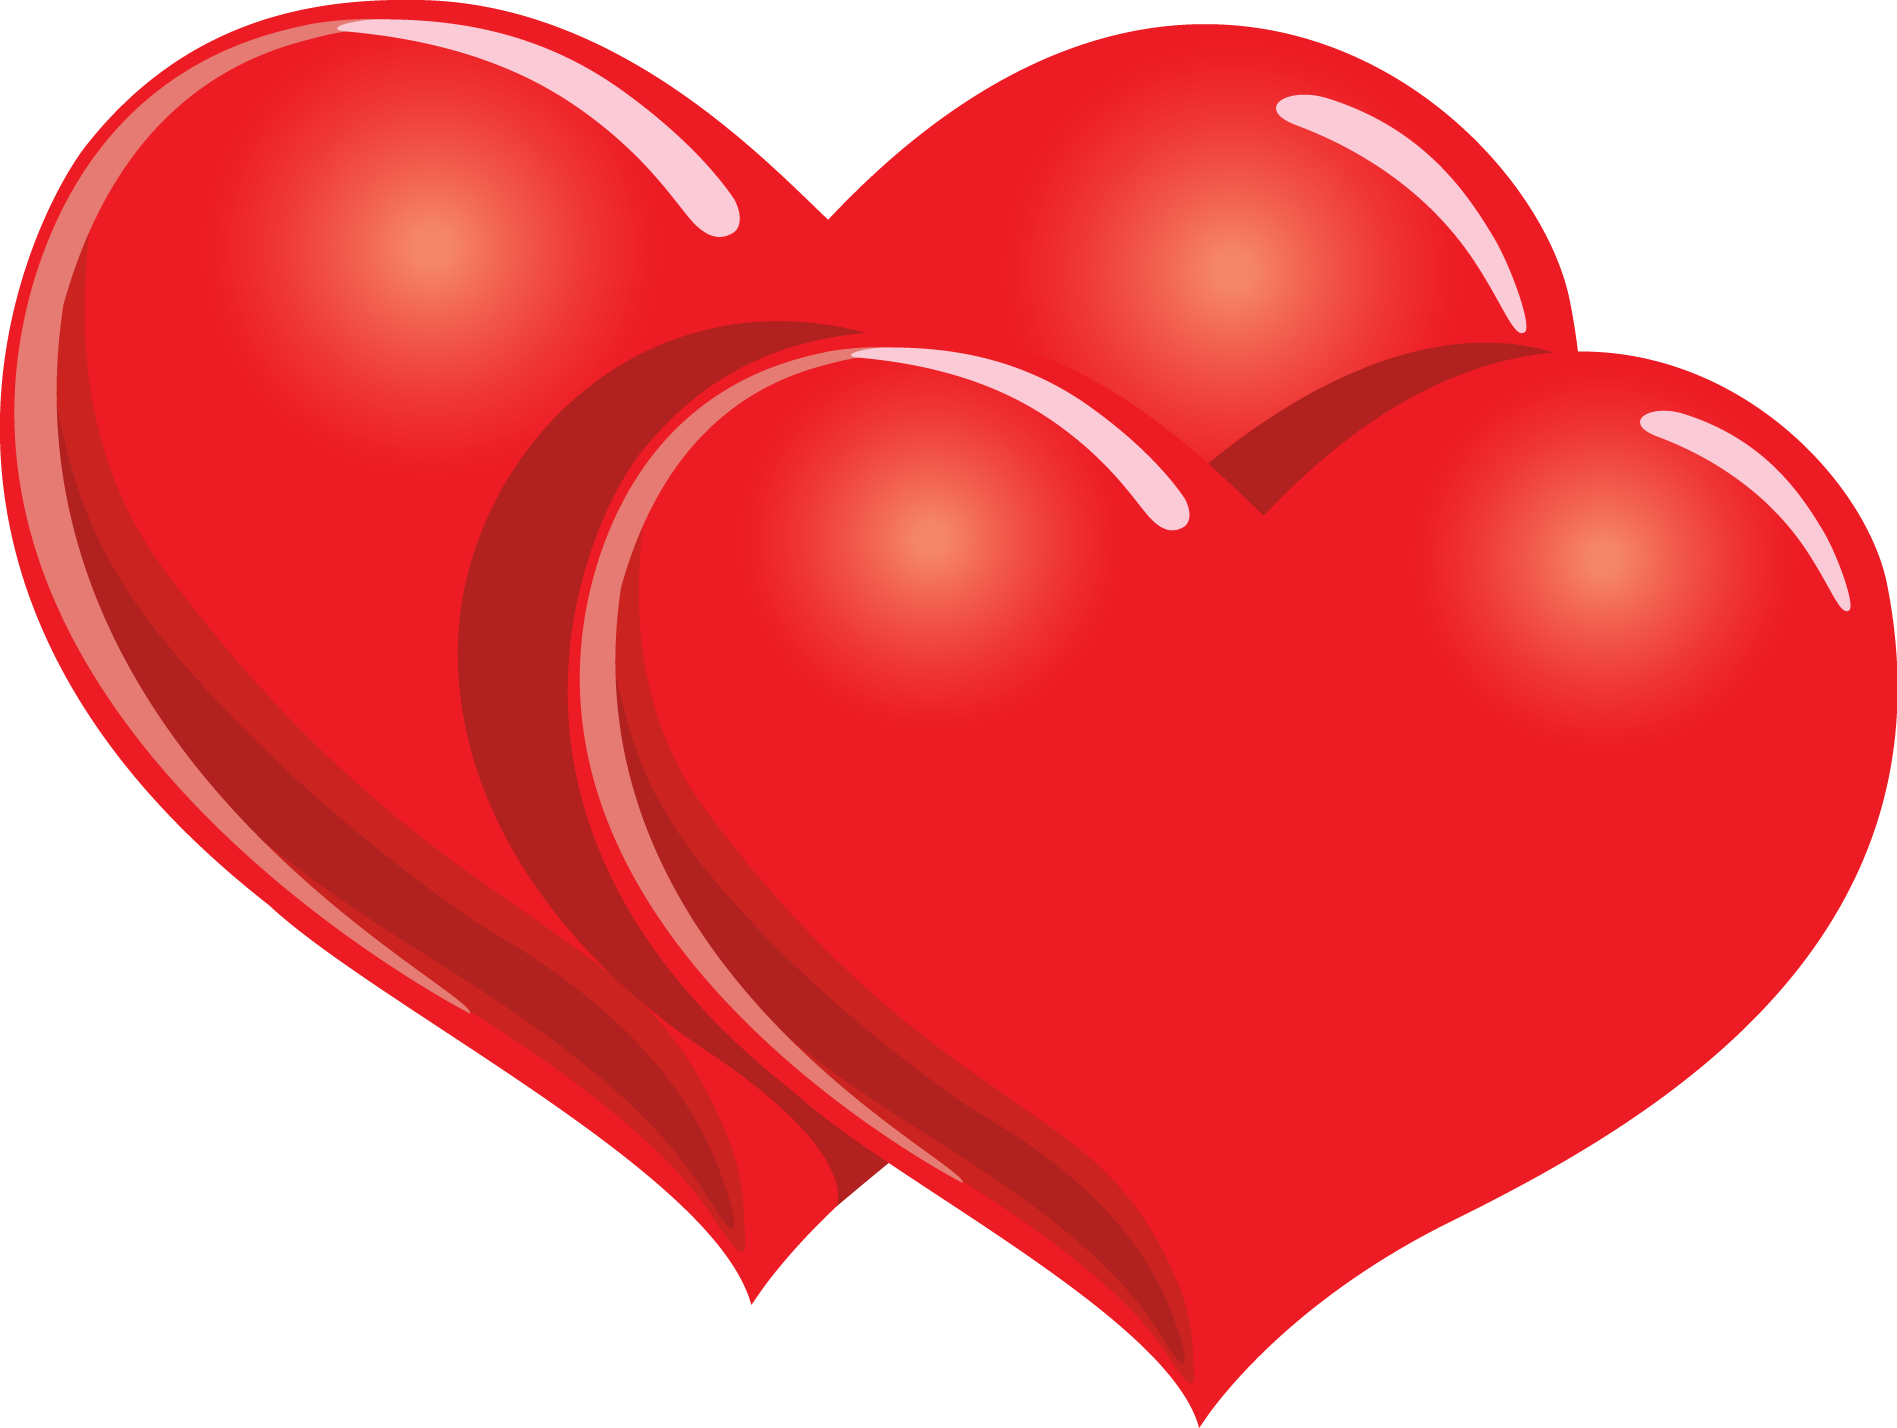 Red love heart clipart - ClipartFox